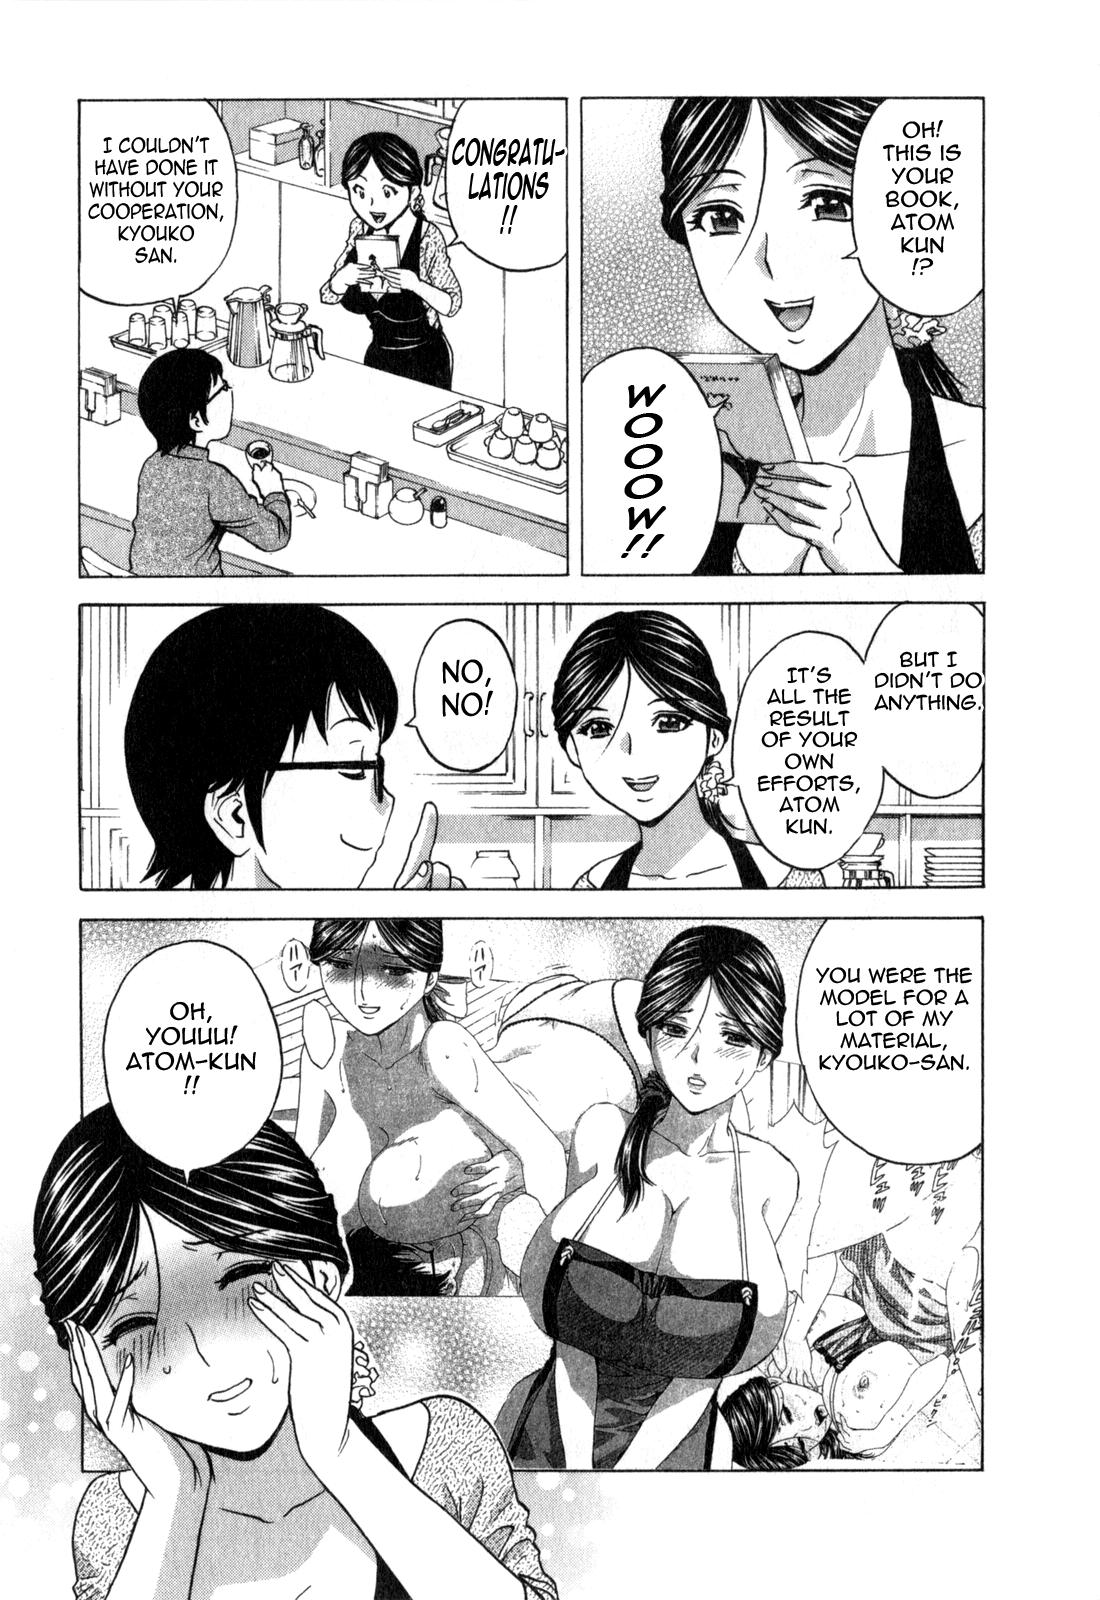 [Hidemaru] Life with Married Women Just Like a Manga 3 - Ch. 1-7 [English] {Tadanohito} 14